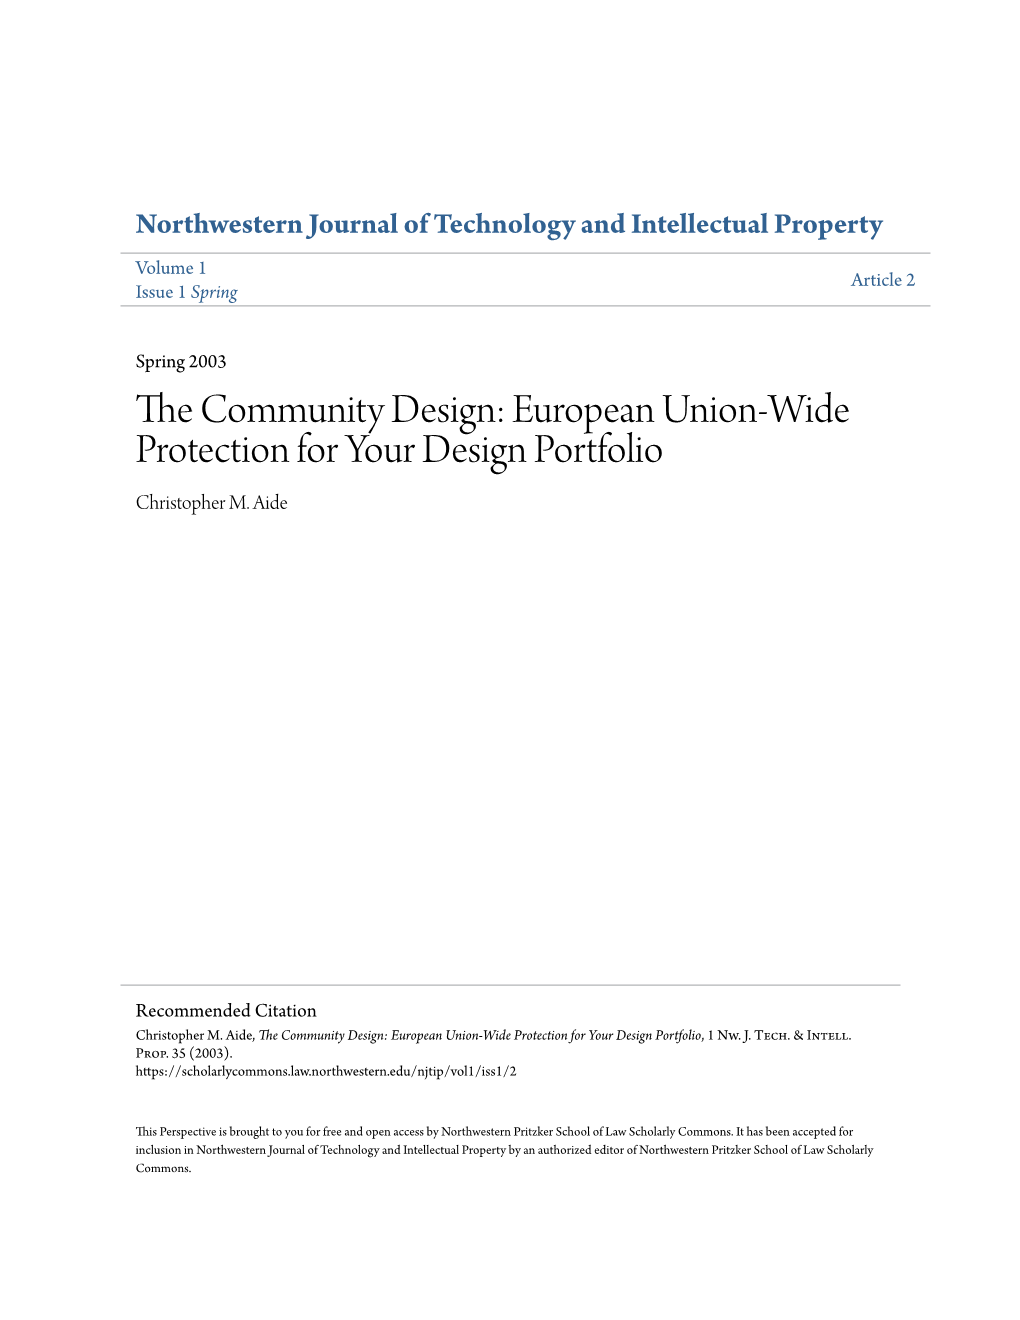 The Community Design: European Union-Wide Protection for Your Design Portfolio, 1 Nw